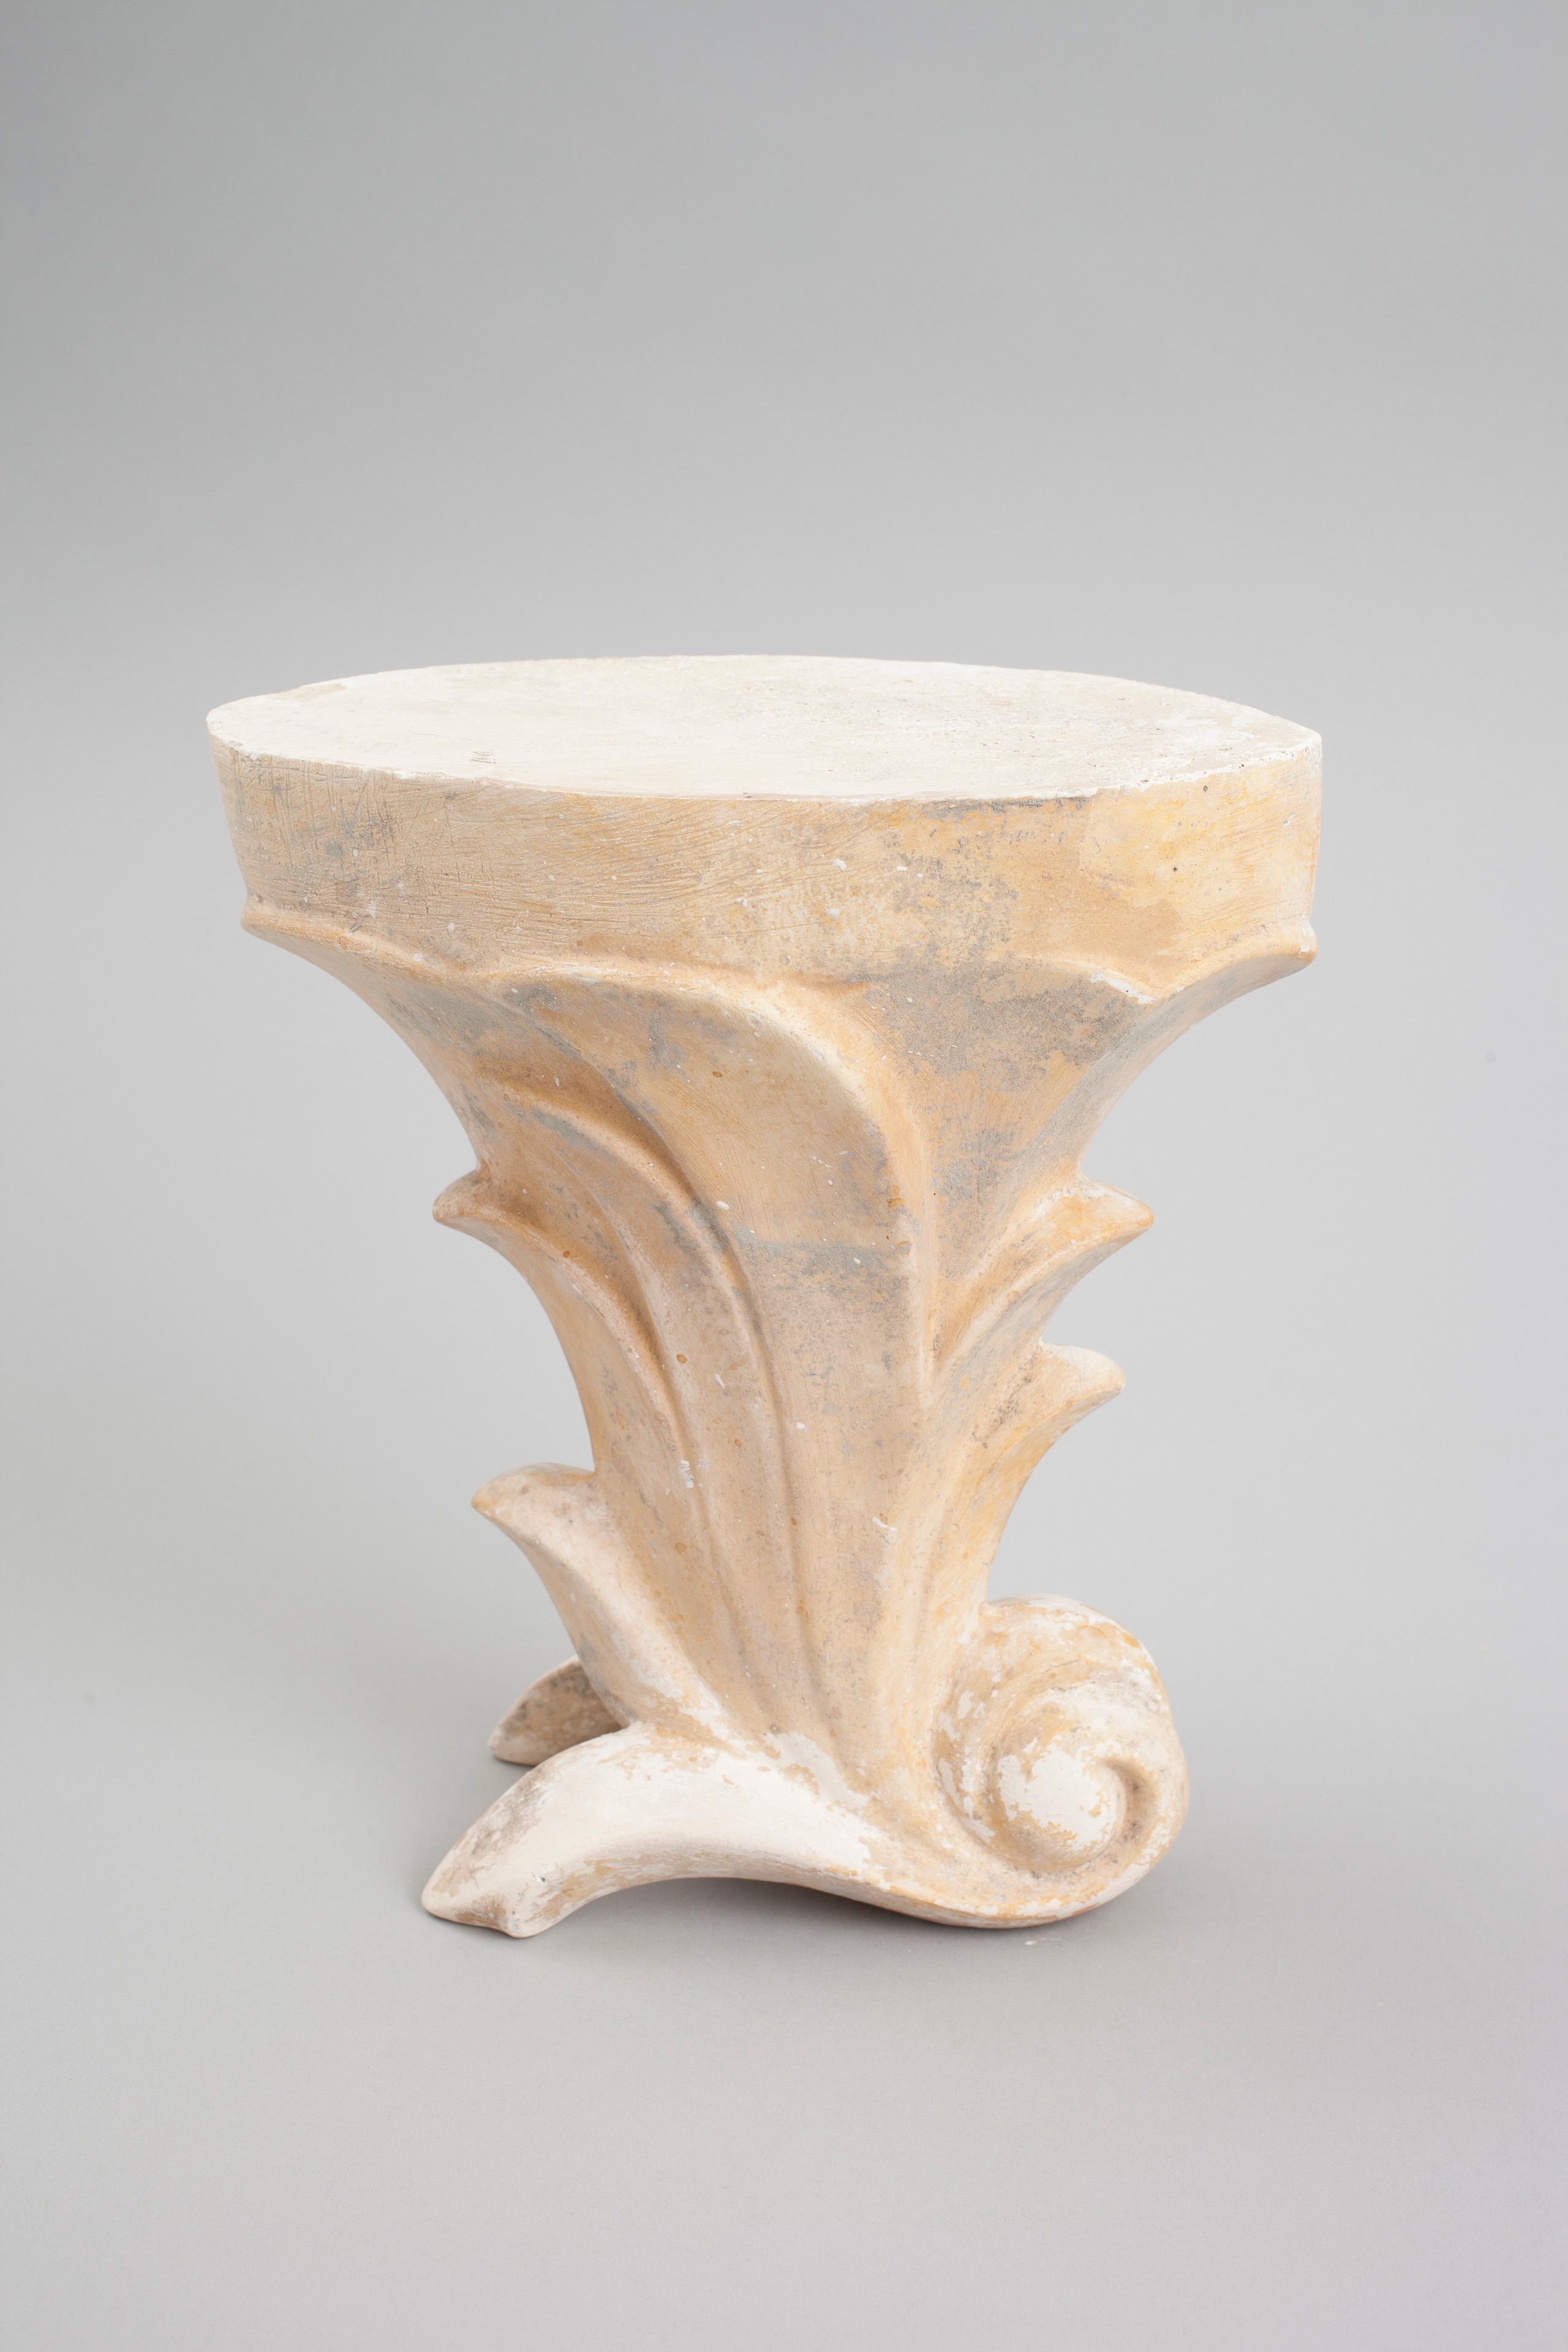 Plaster model vase, made by Pates Potteries Pty Ltd